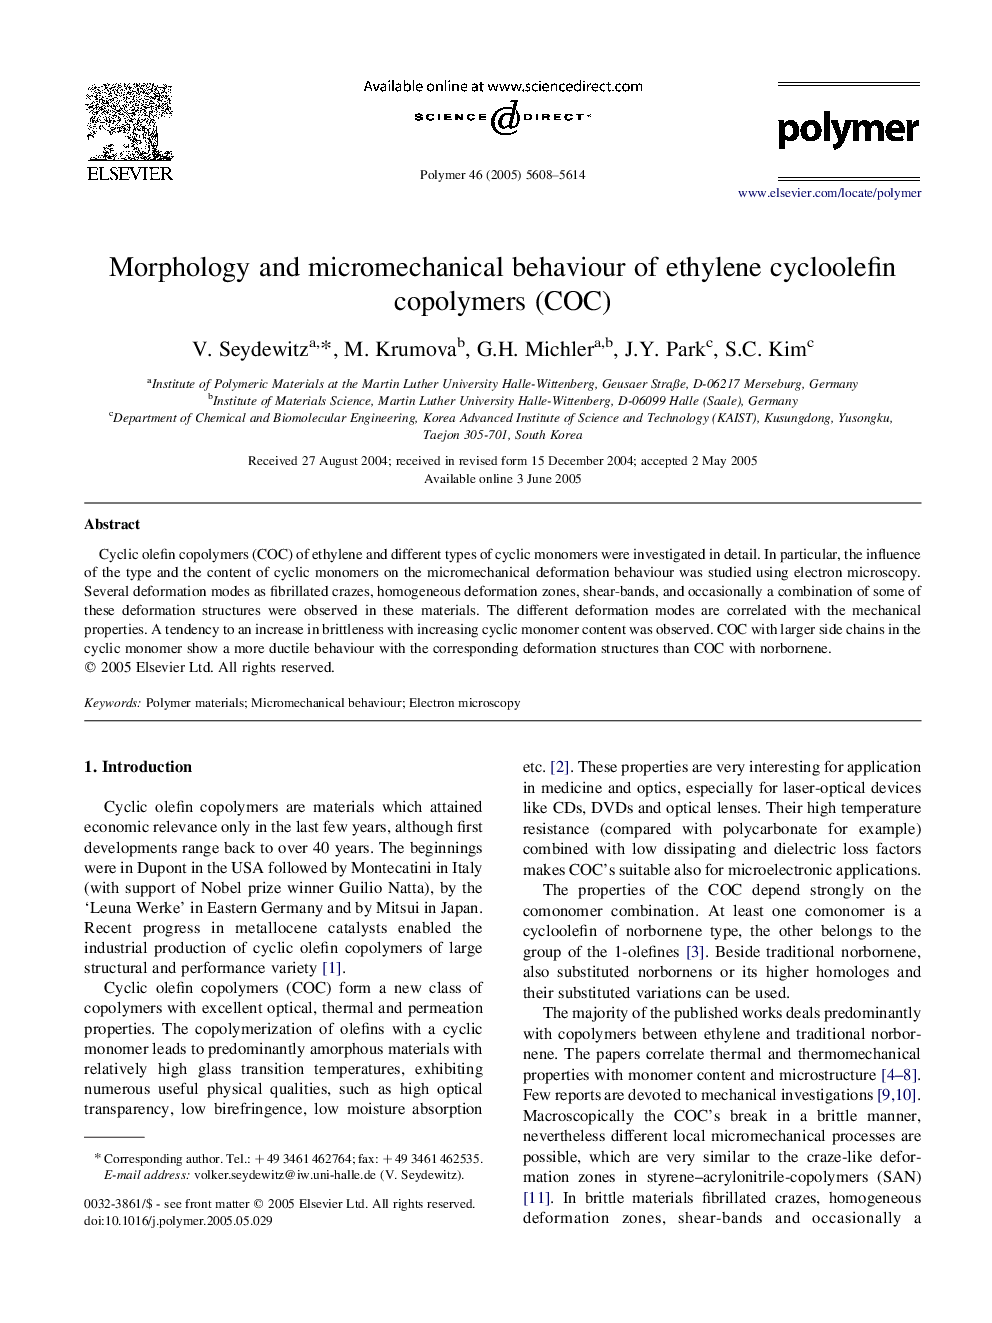 Morphology and micromechanical behaviour of ethylene cycloolefin copolymers (COC)